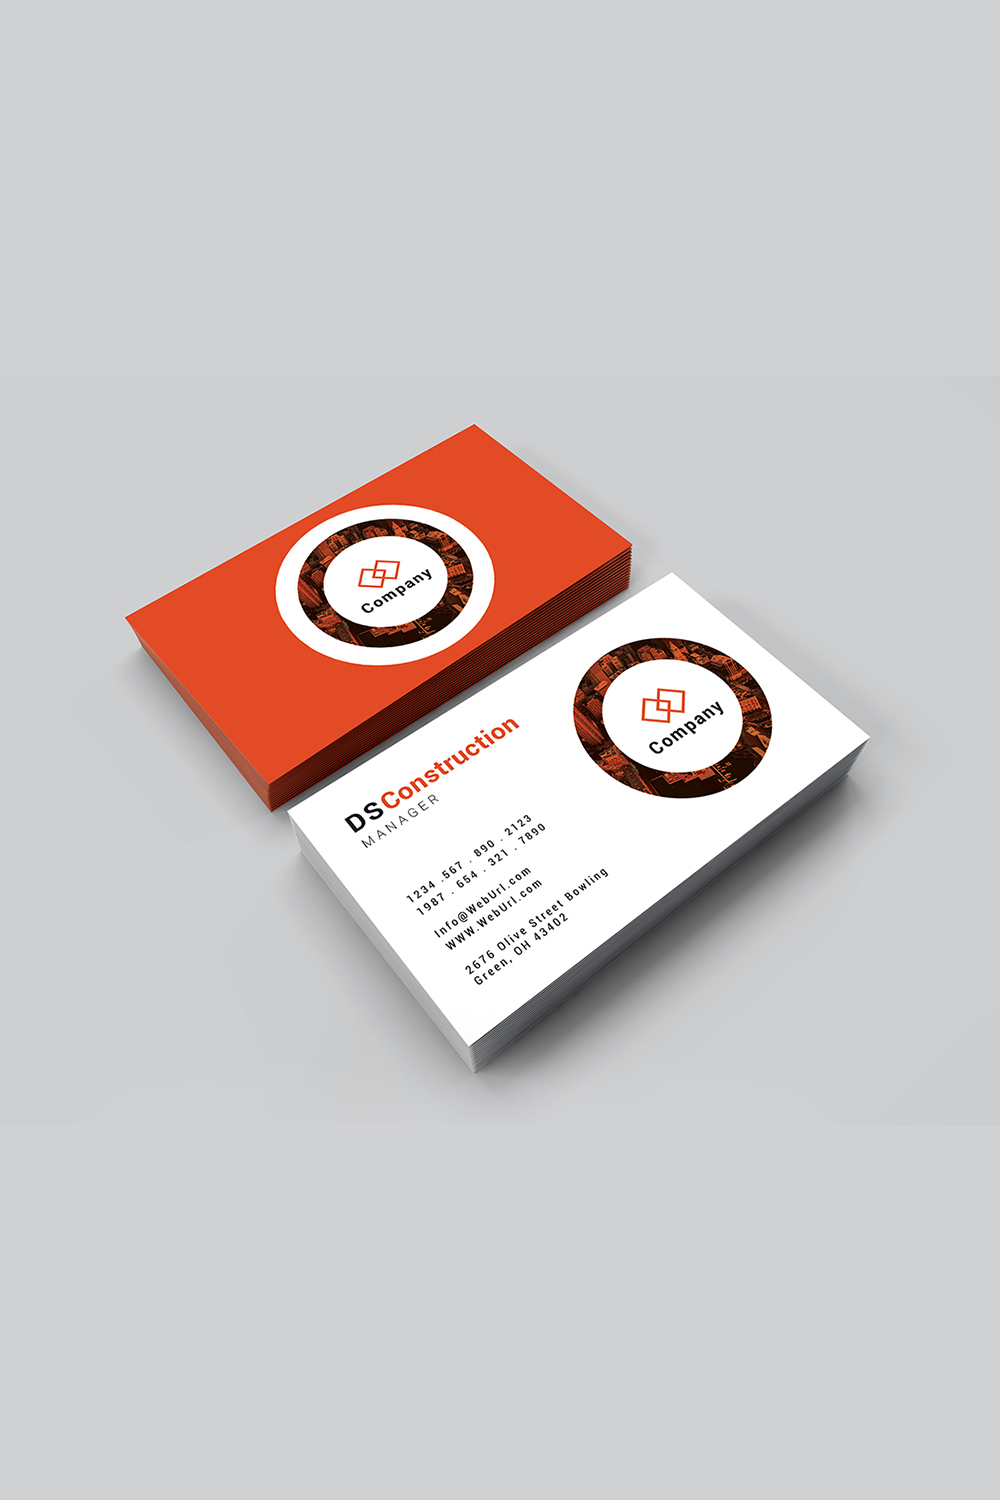 Construction business card design pinterest preview image.